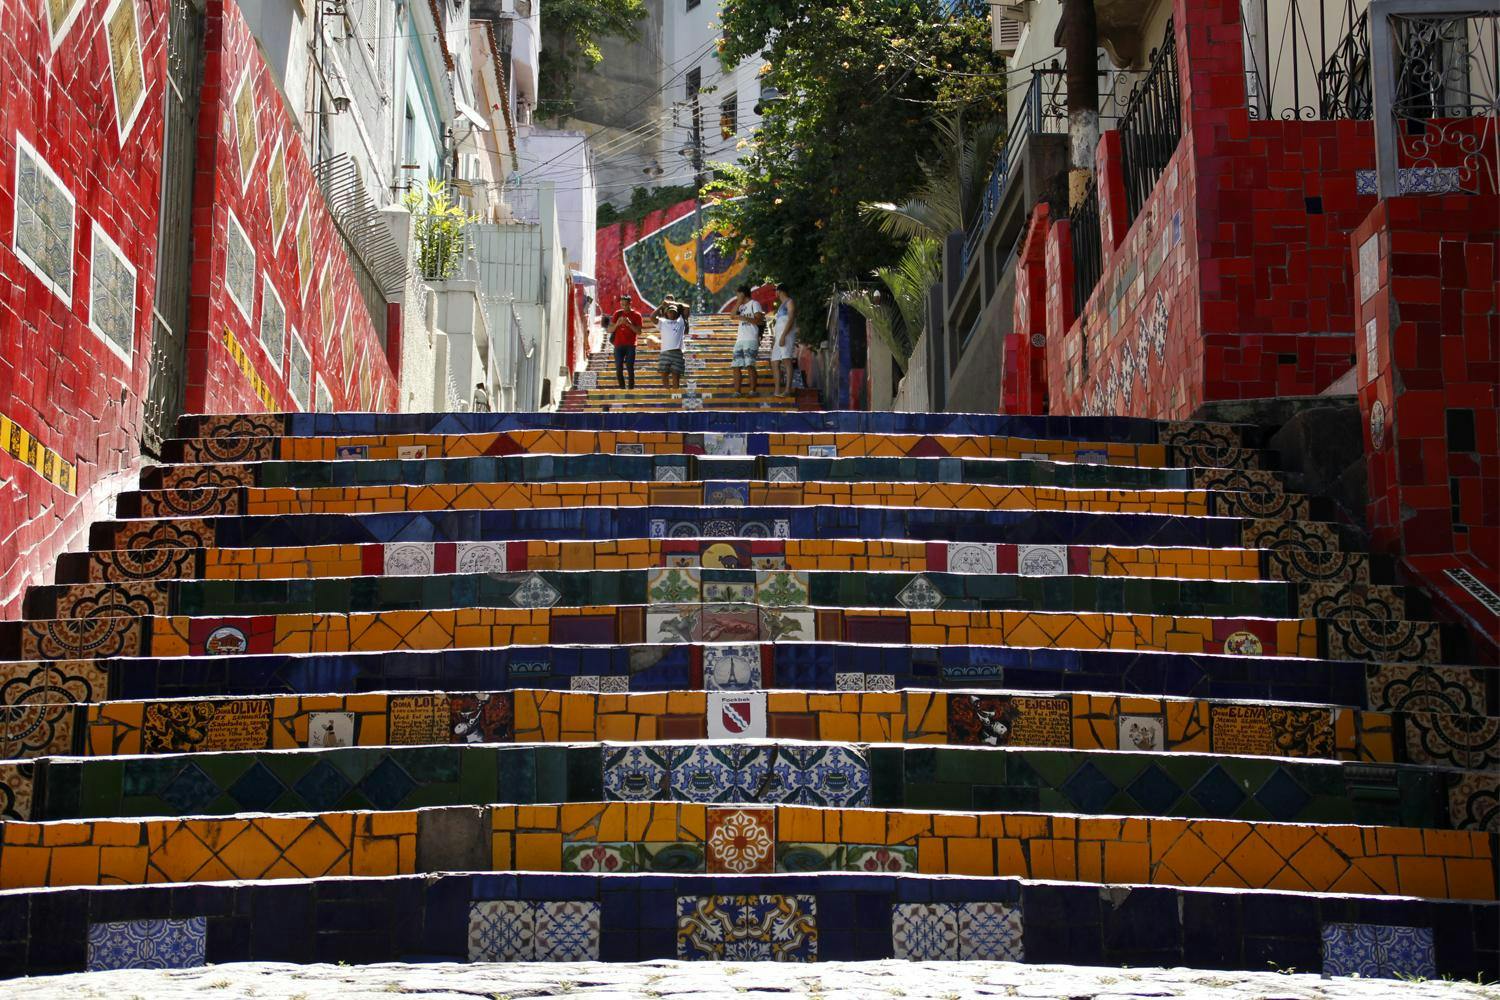 Selaron Steps Rio de Janeiro Brazil.jpg